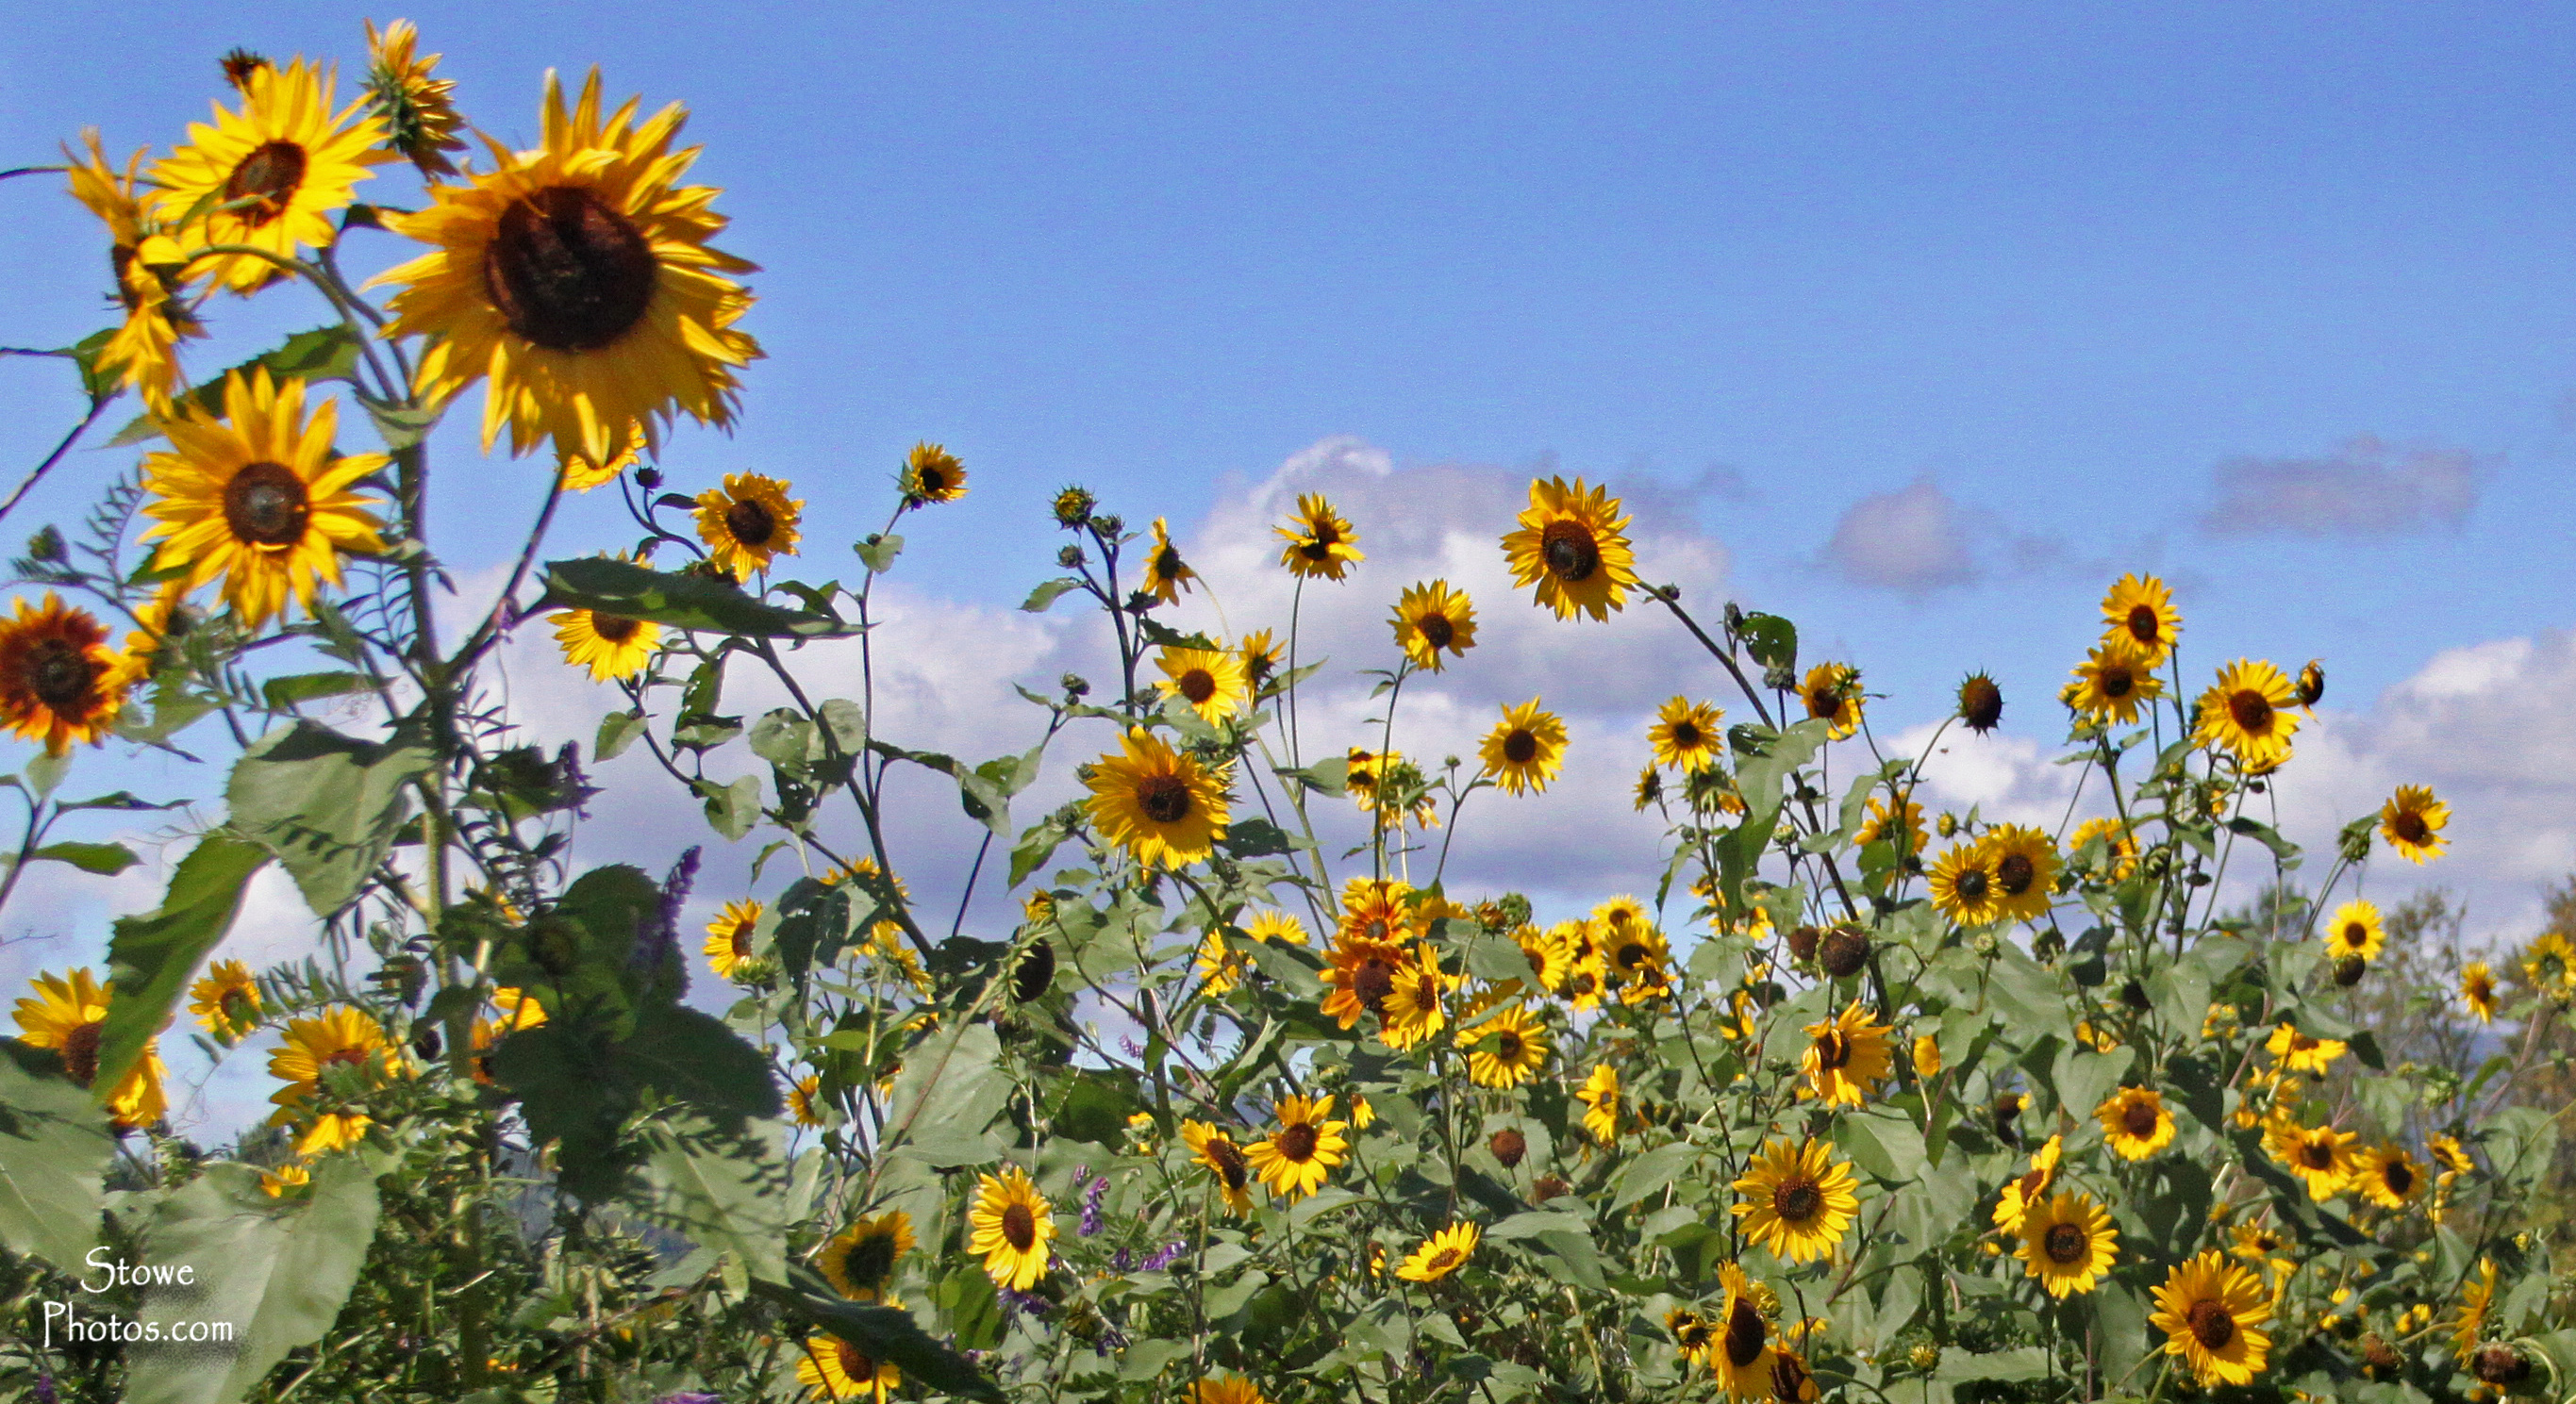 2014 sep 17 sunflowers in waterbury group | Stowe Photos